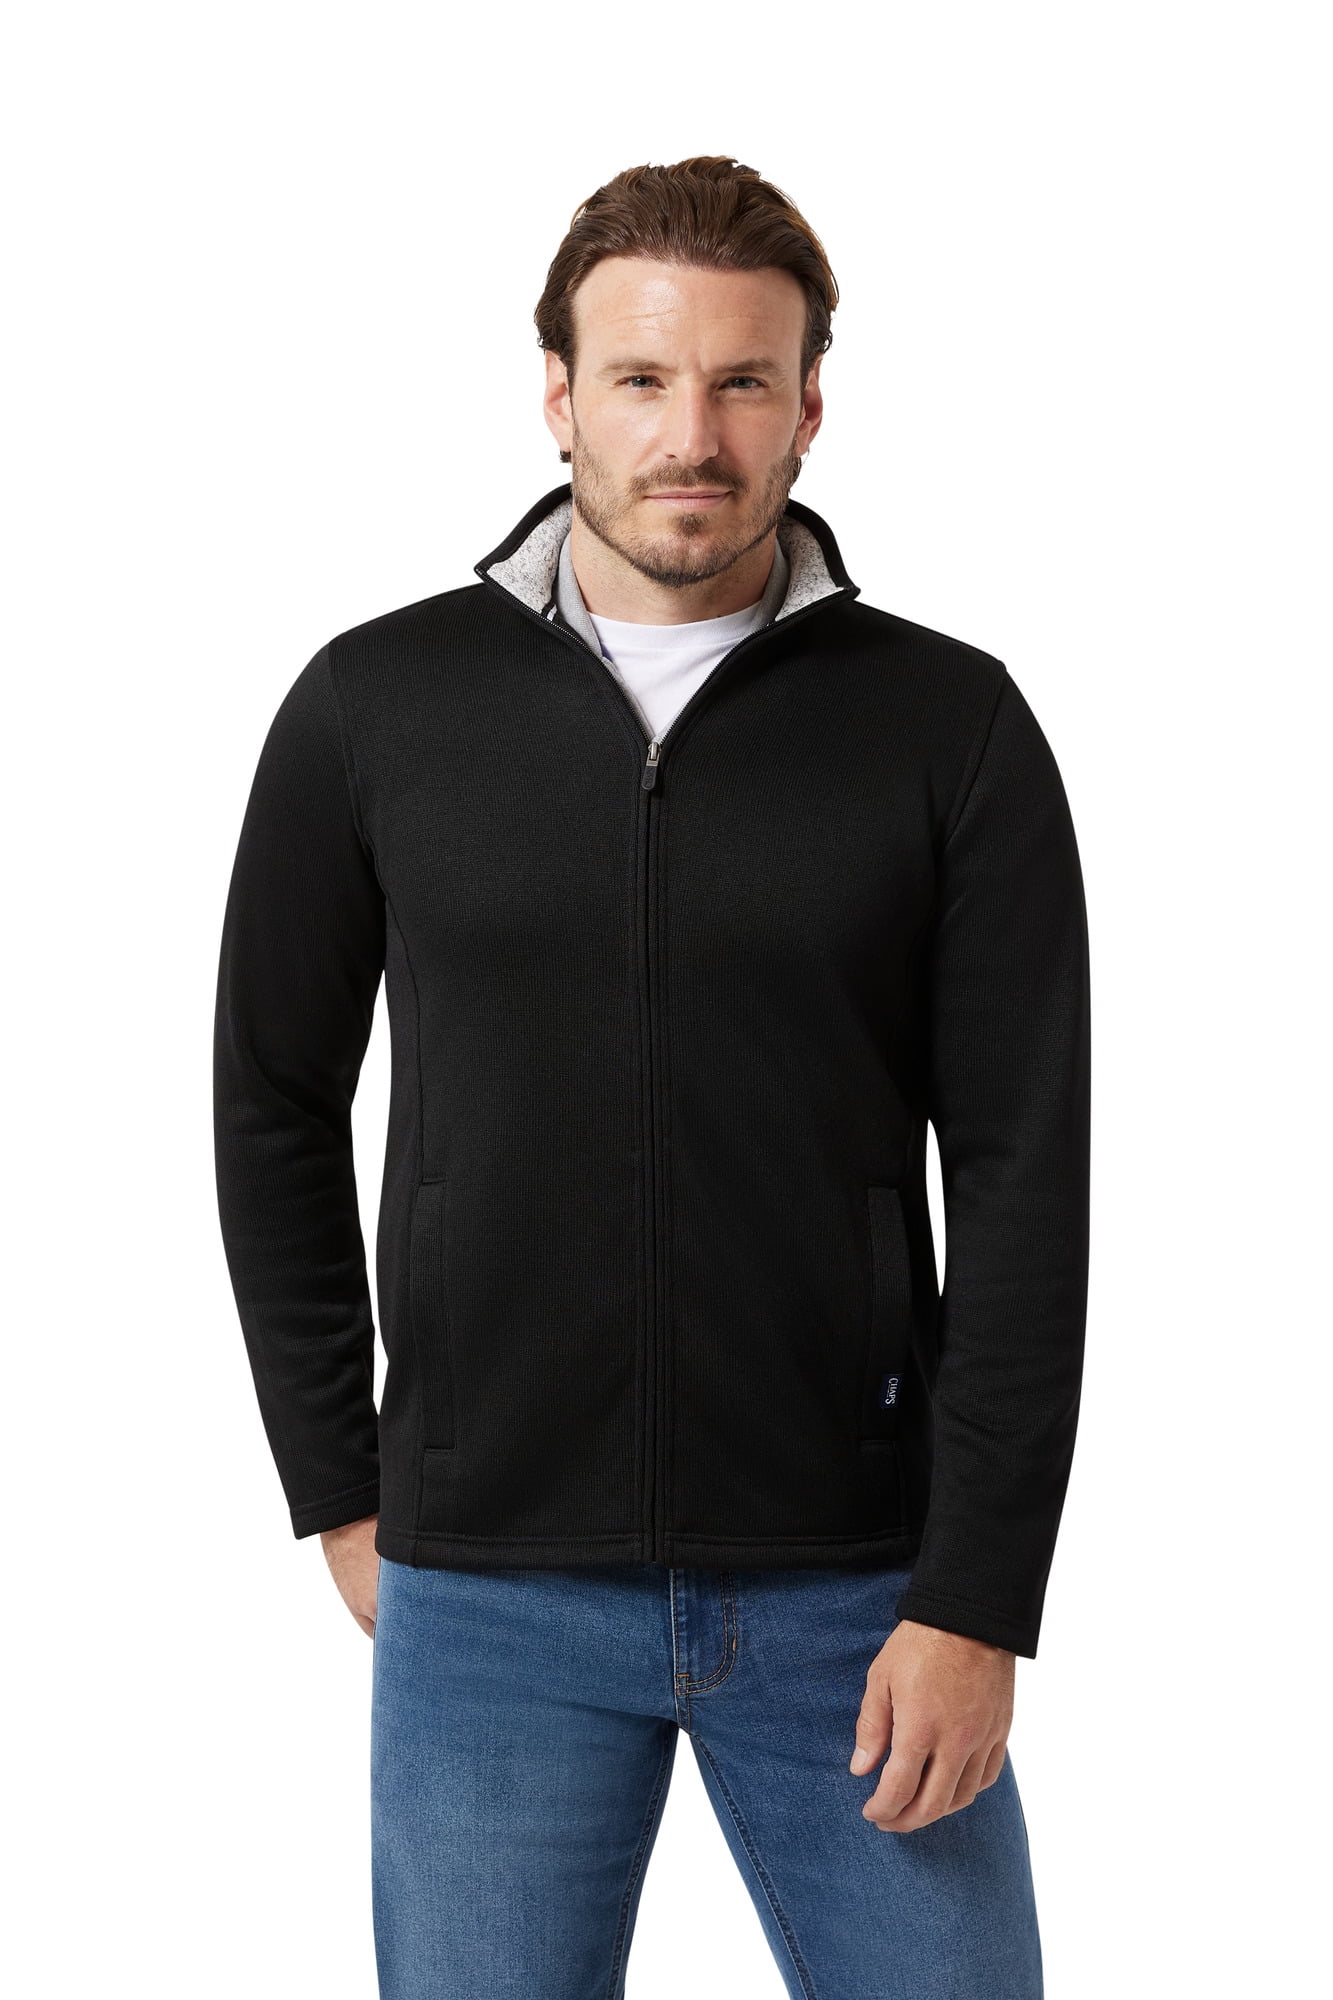 Chaps Men's & Big Men's Sherpa Lined Fleece Snap Front Sweater Jacket ...